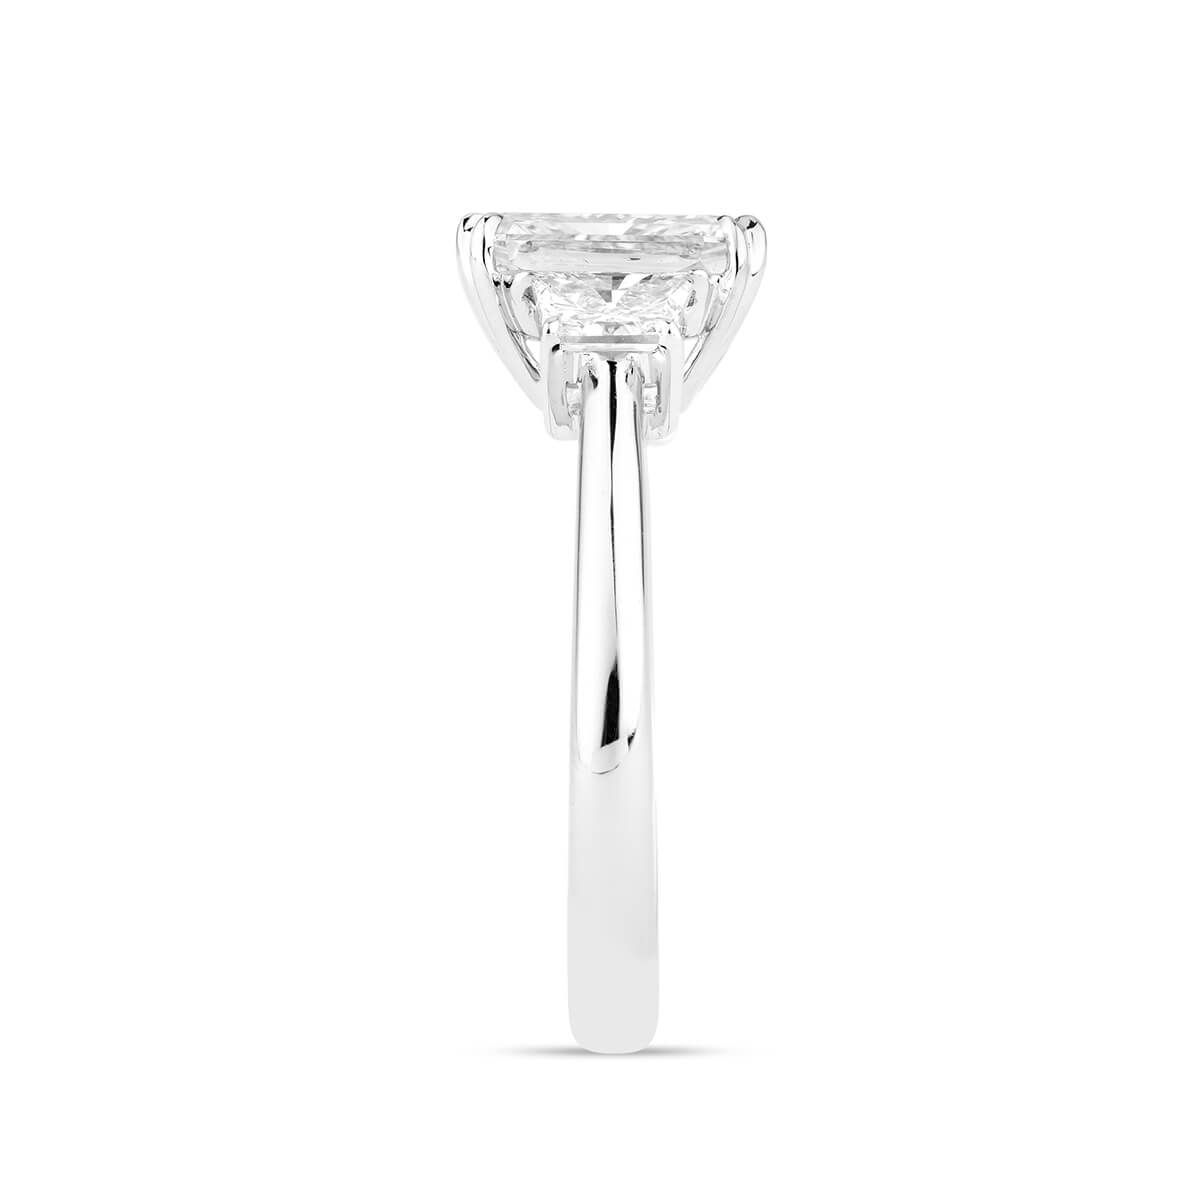  White Diamond Ring, 2.63 Ct. TW, Radiant shape, GIA Certified, 2298248905